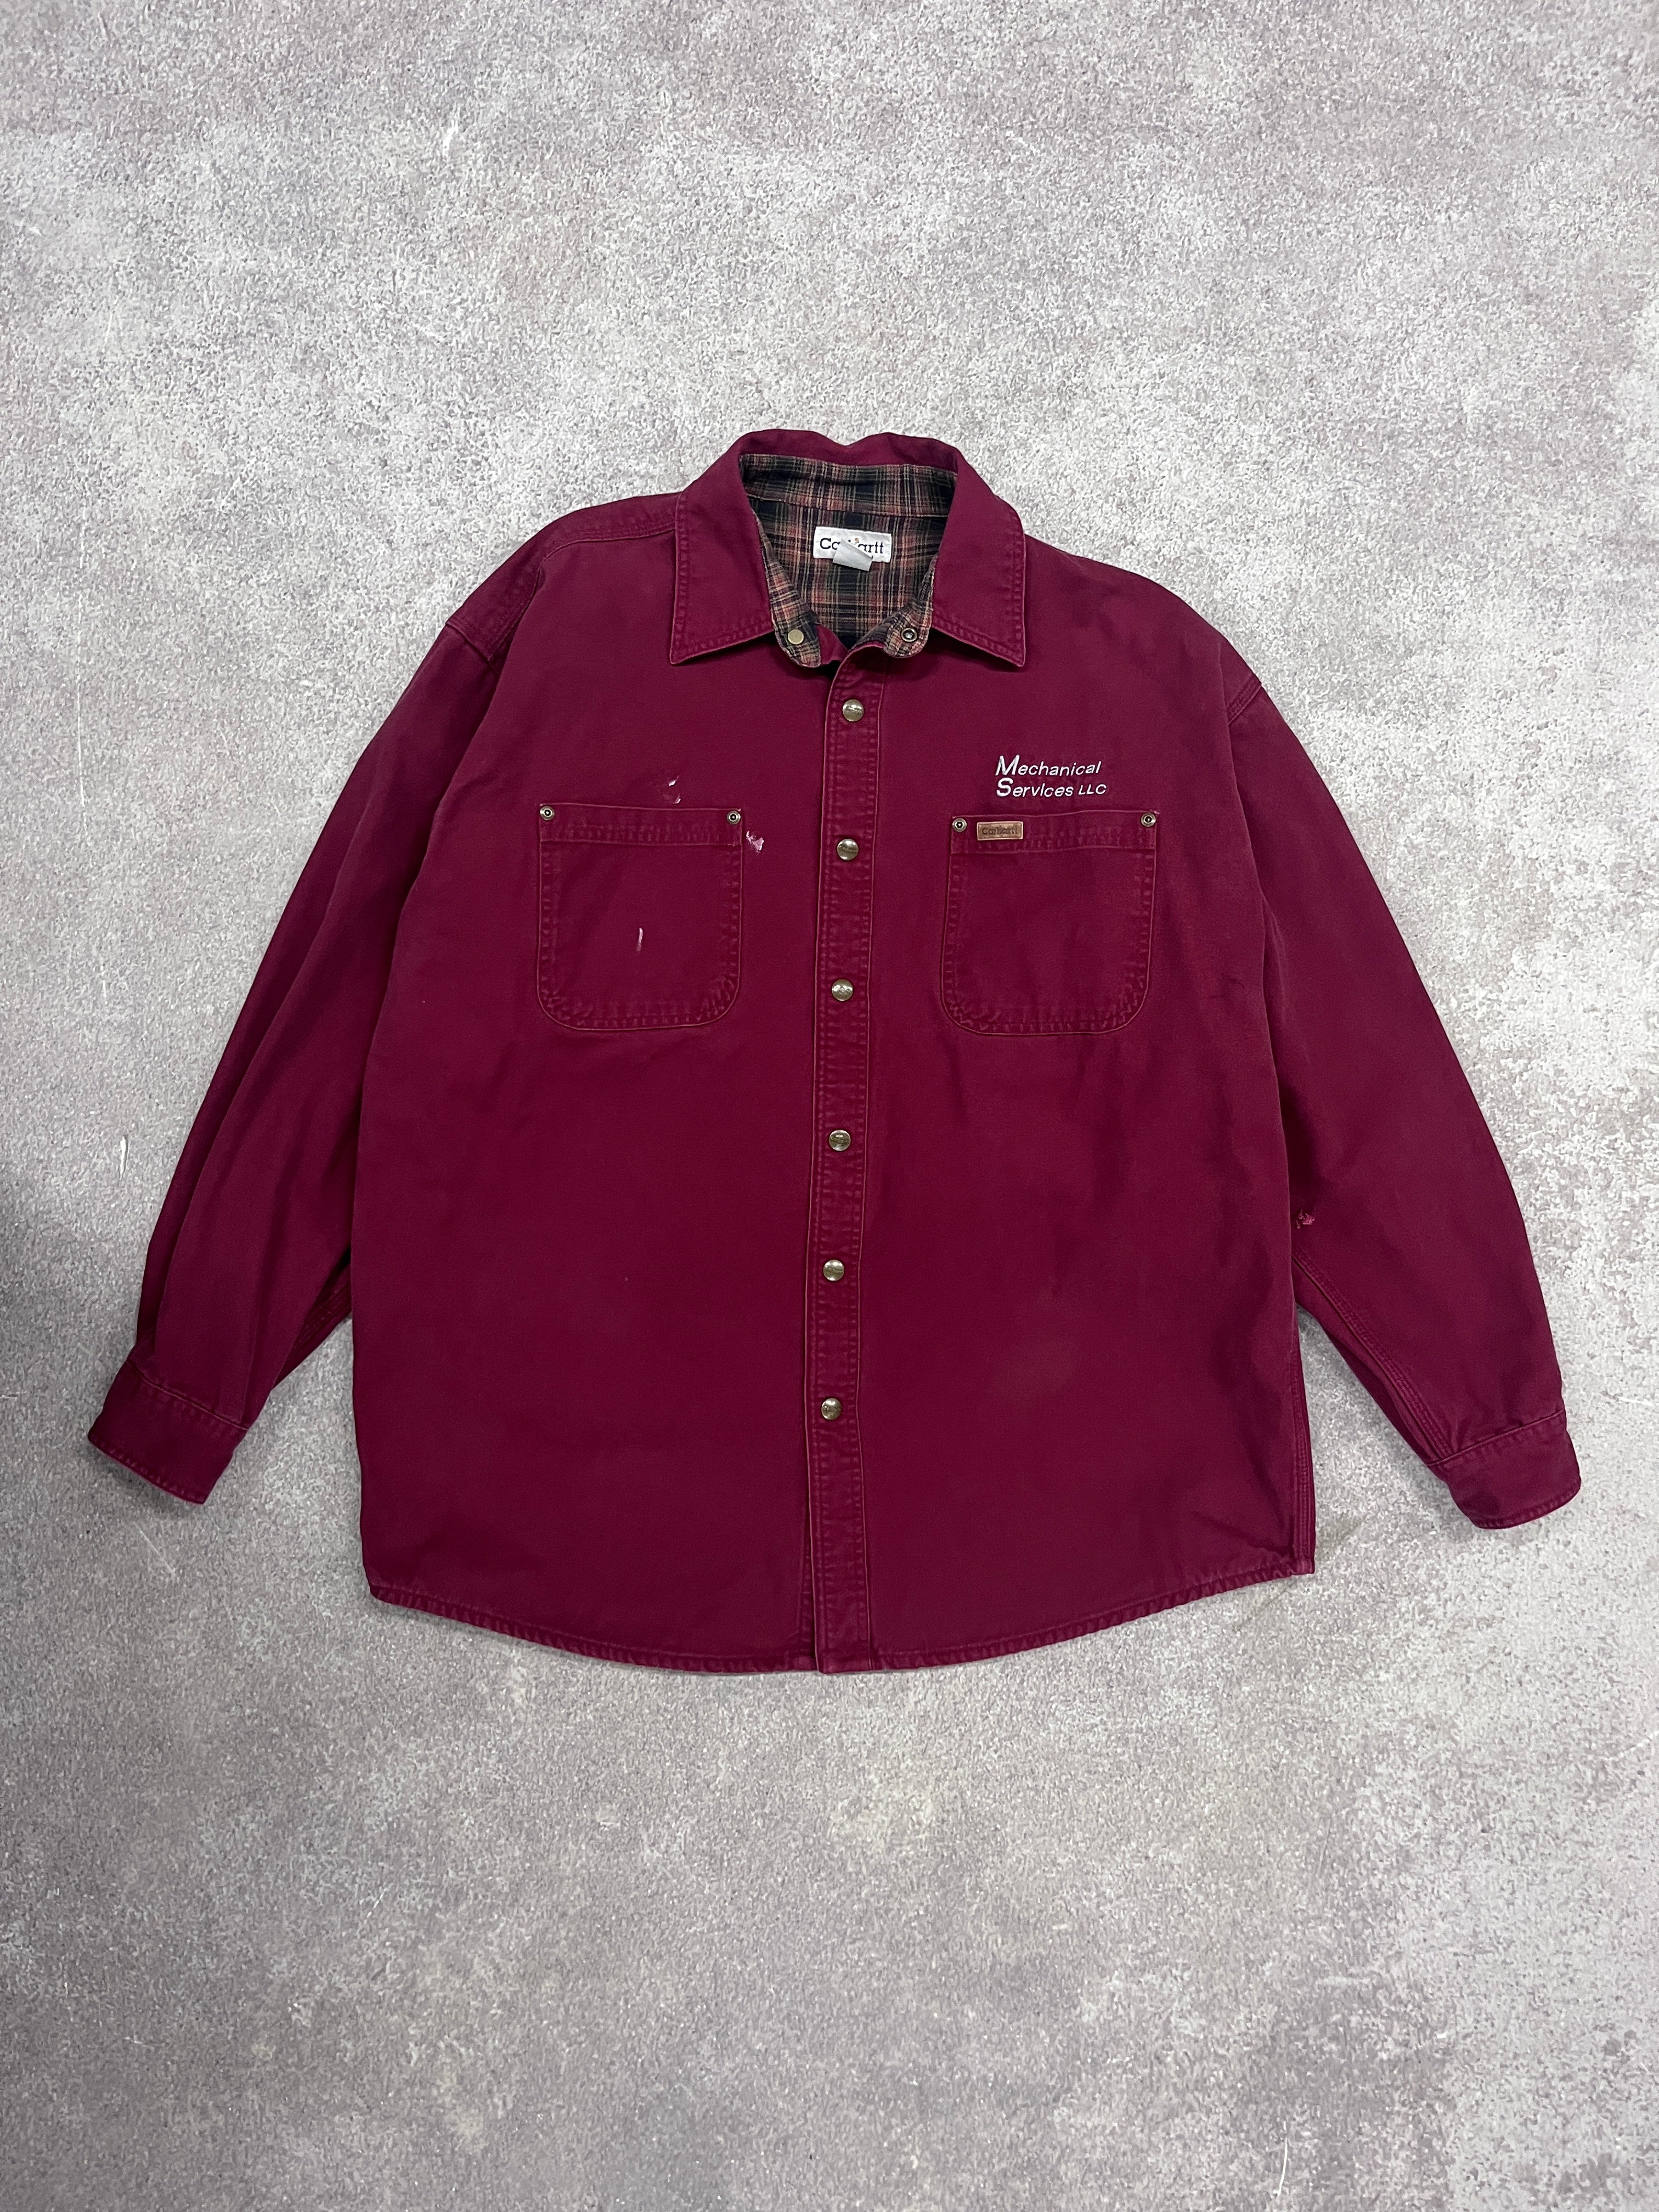 Vintage Carhartt Workwear „Mechanical Services“ Shirt Red // Large - RHAGHOUSE VINTAGE